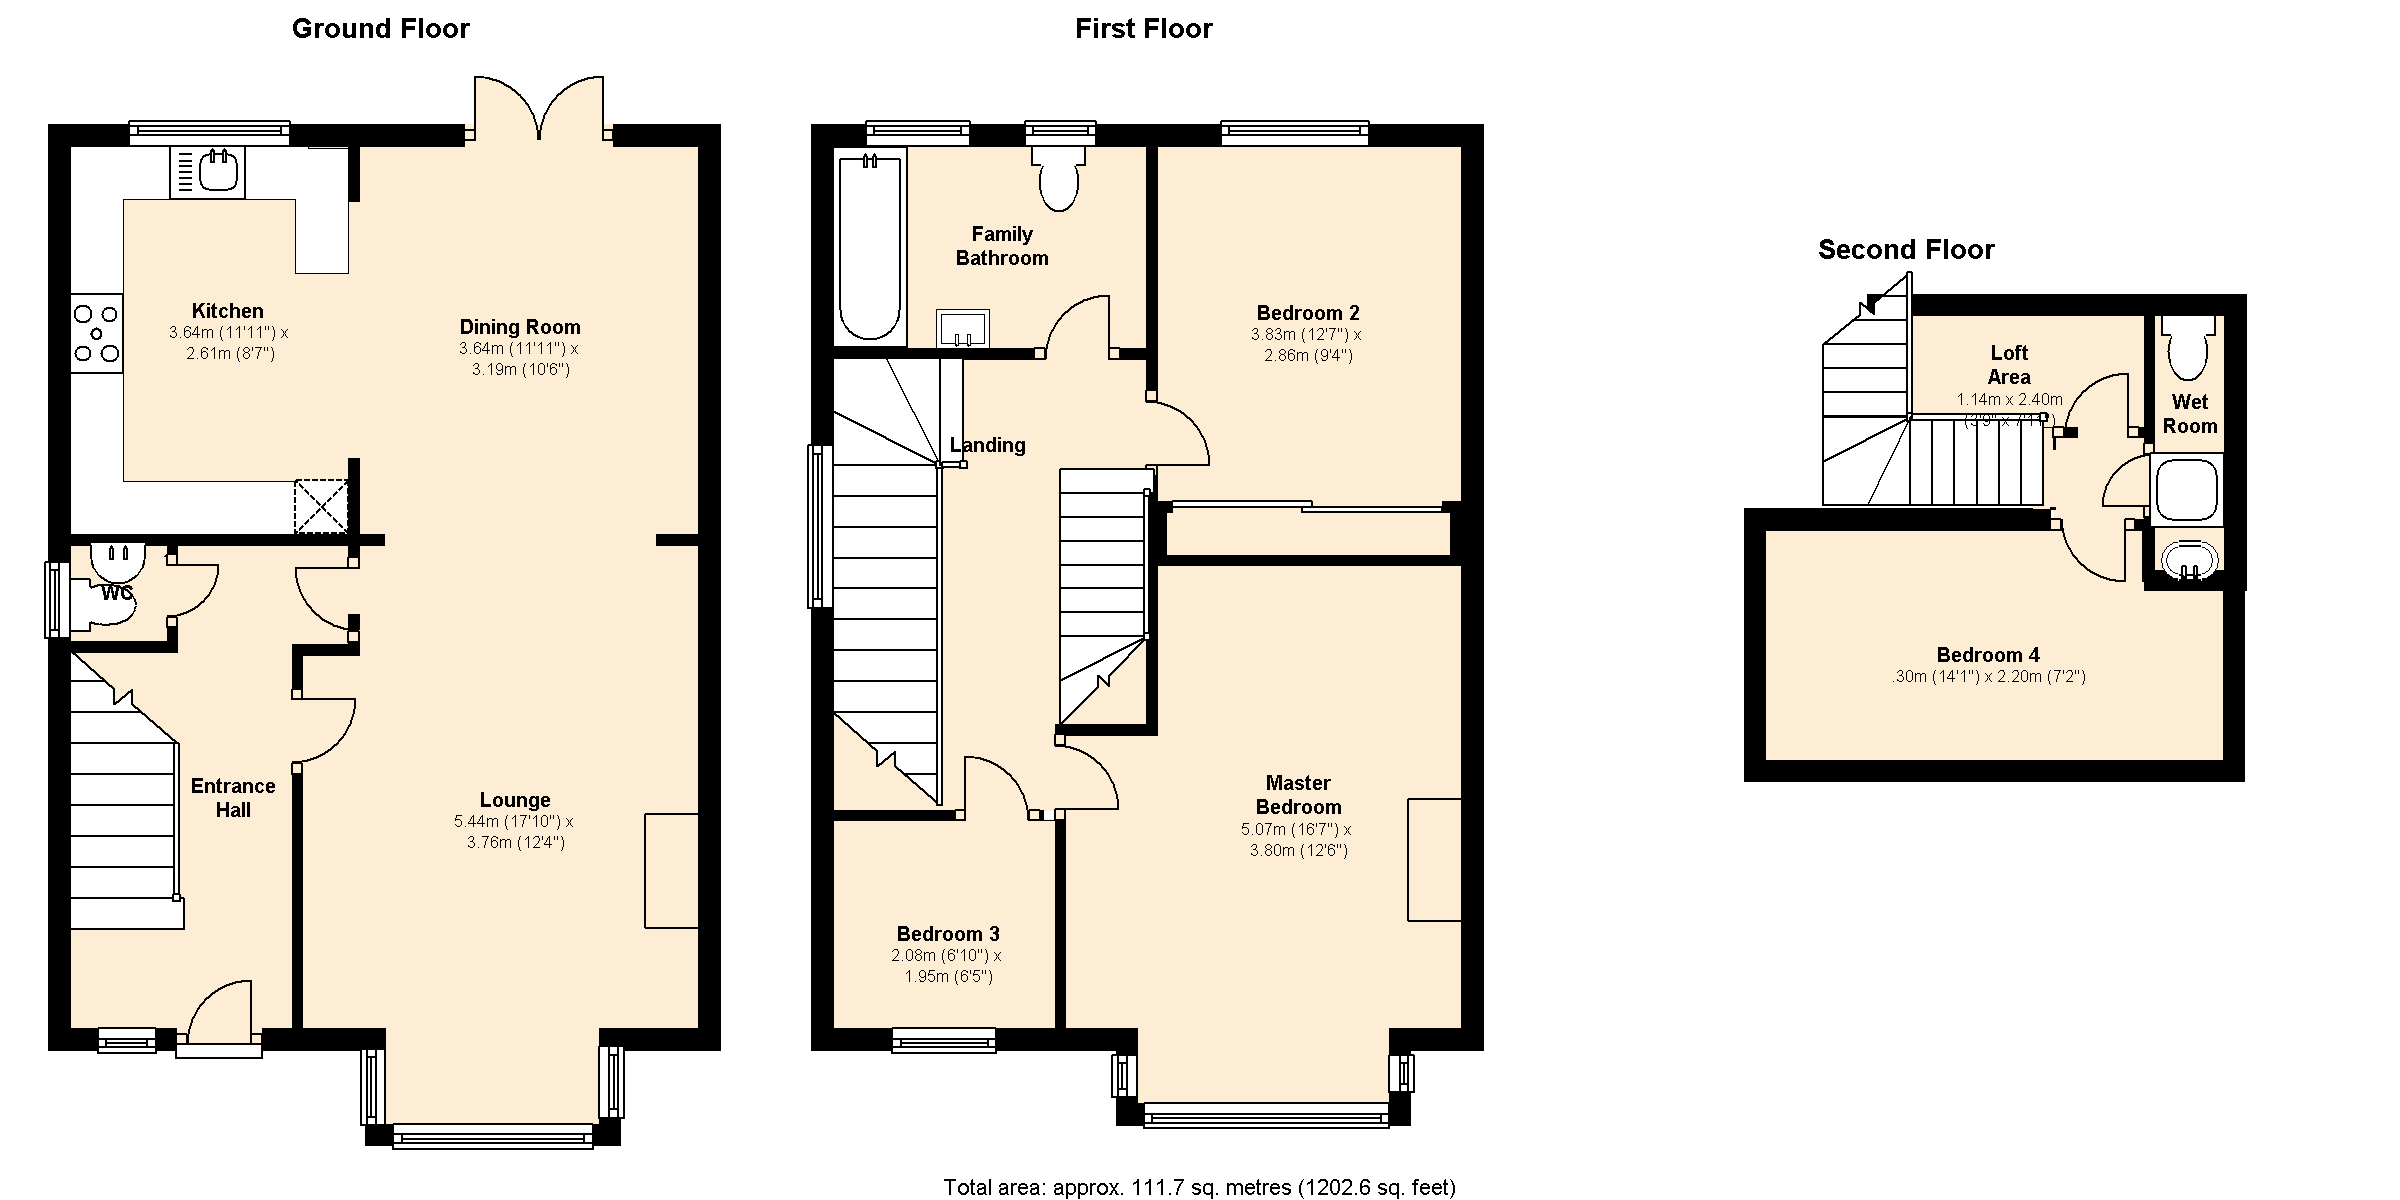 Estate Agents Floor Plan Top Impressive Example Plans